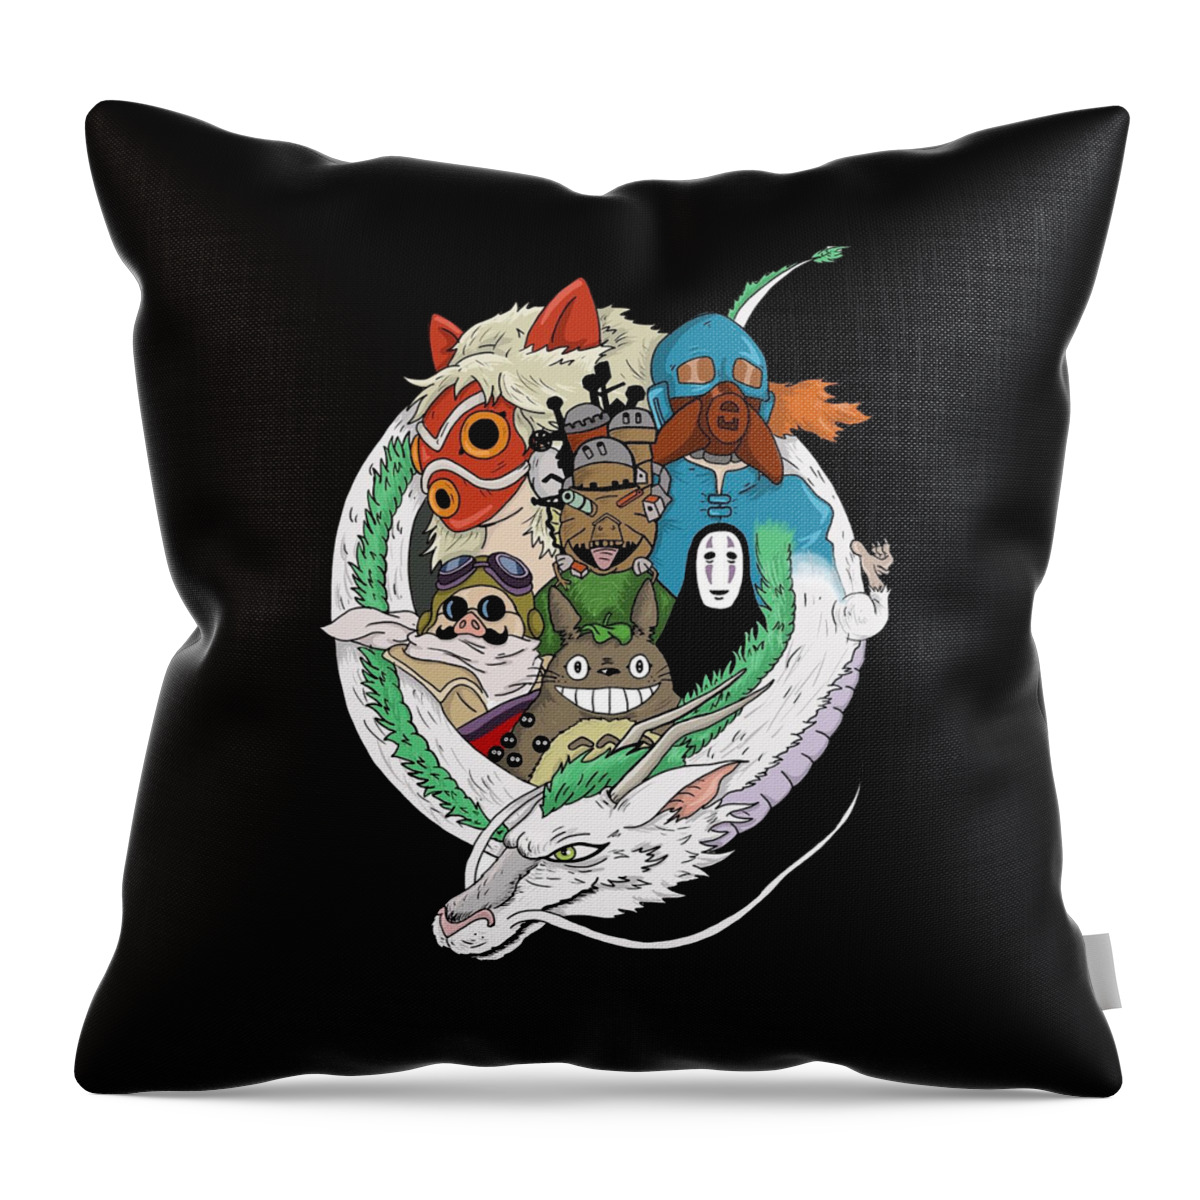 Studio Ghibli Throw Pillow featuring the digital art Studio Ghibli by Dyah Kurmo